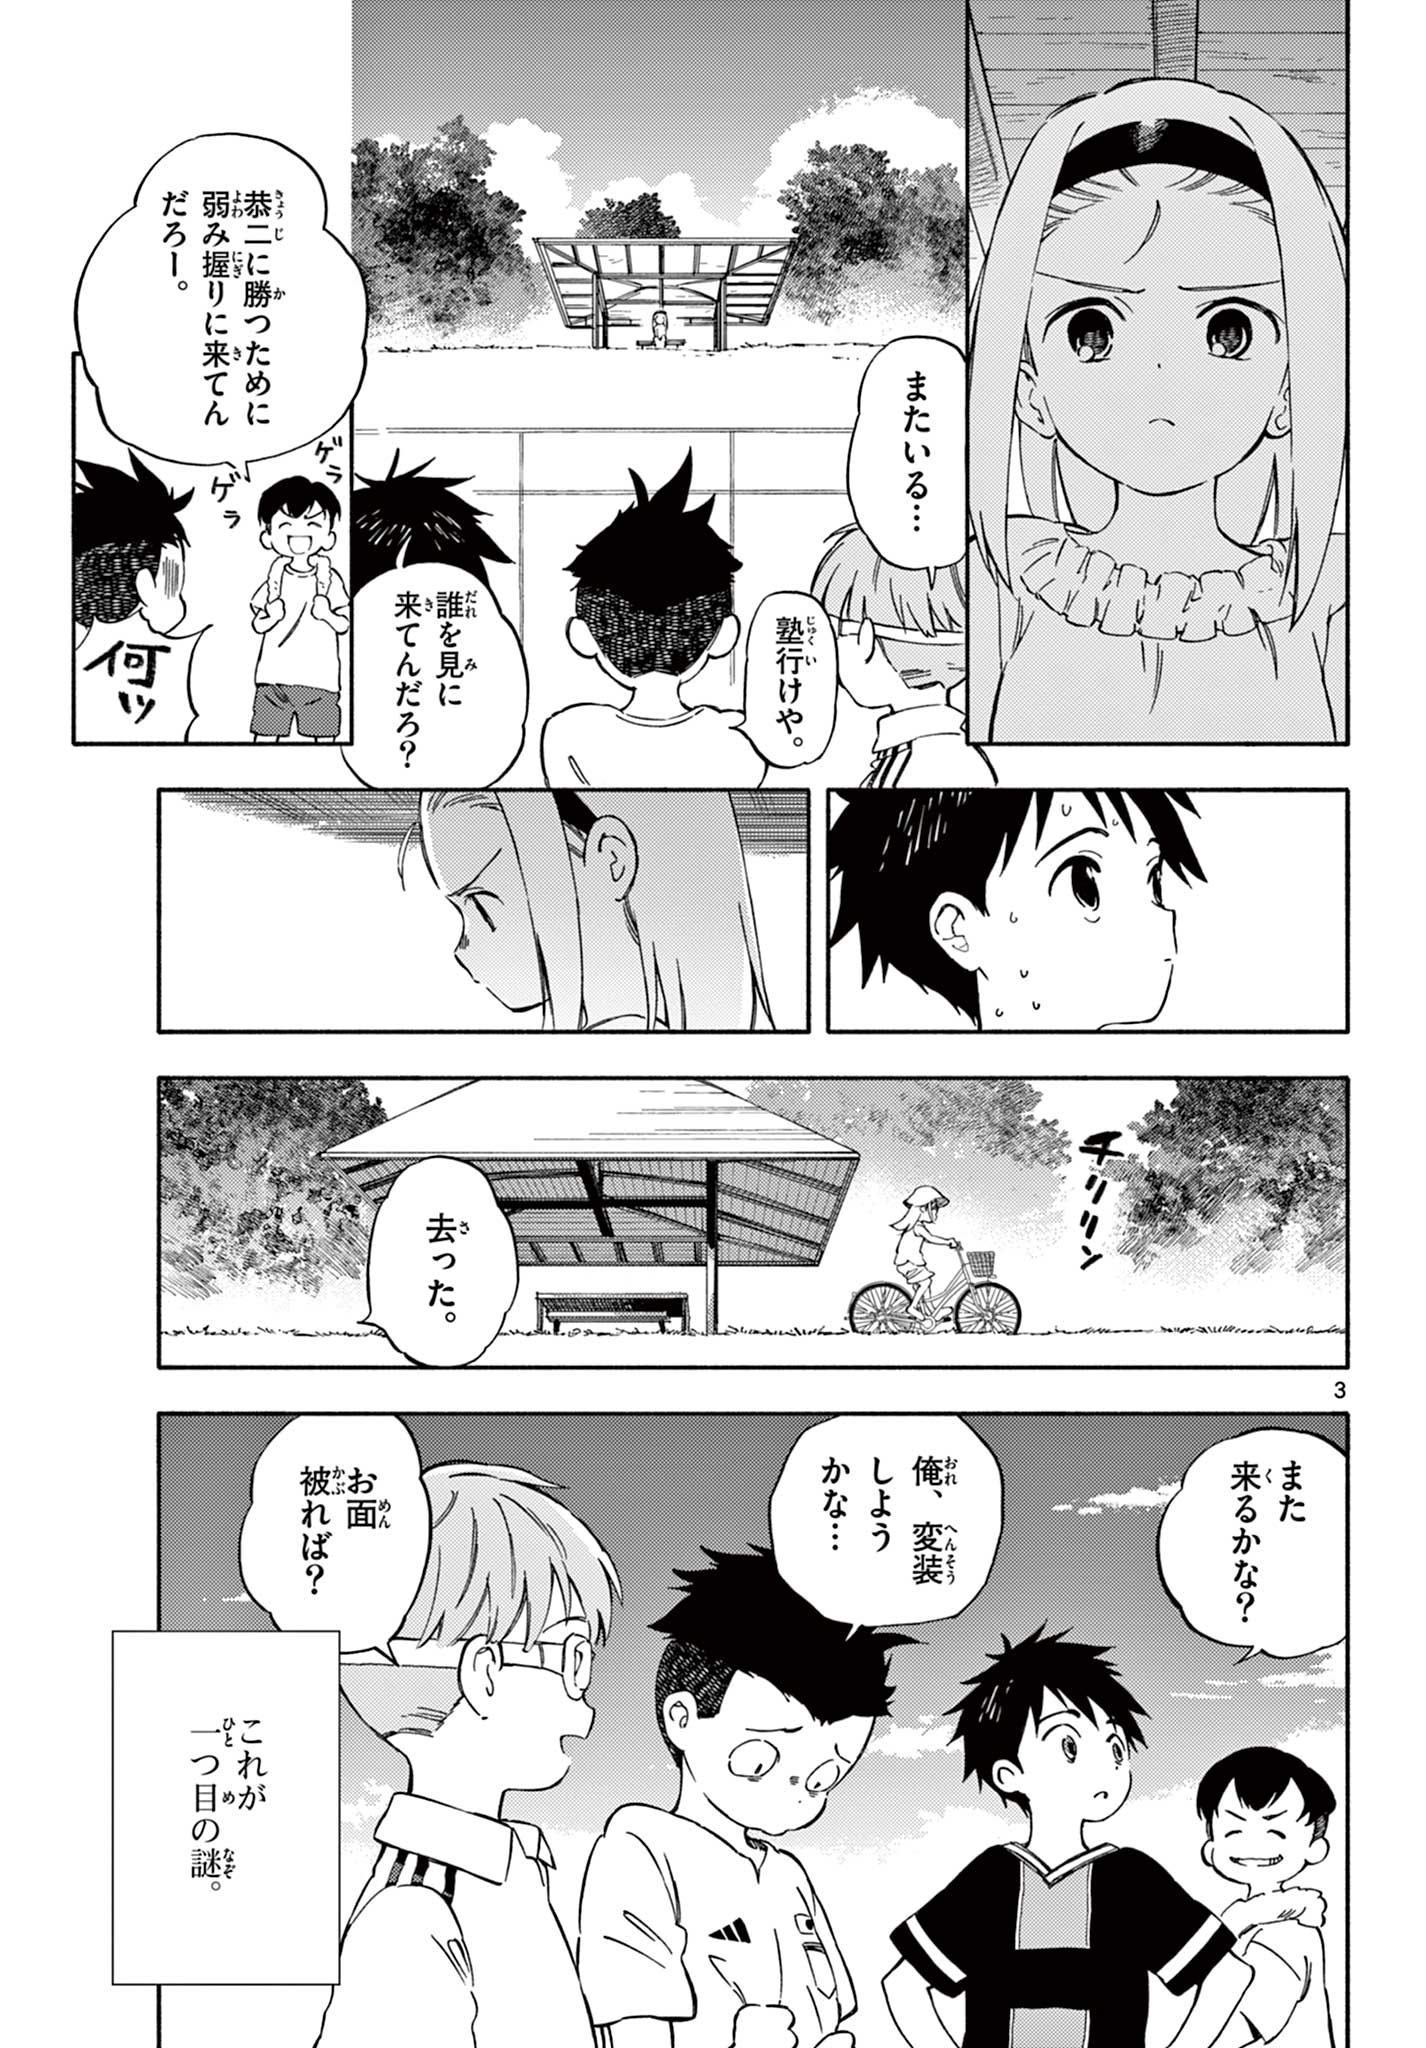 Nami no Shijima no Horizont - Chapter 9.1 - Page 3